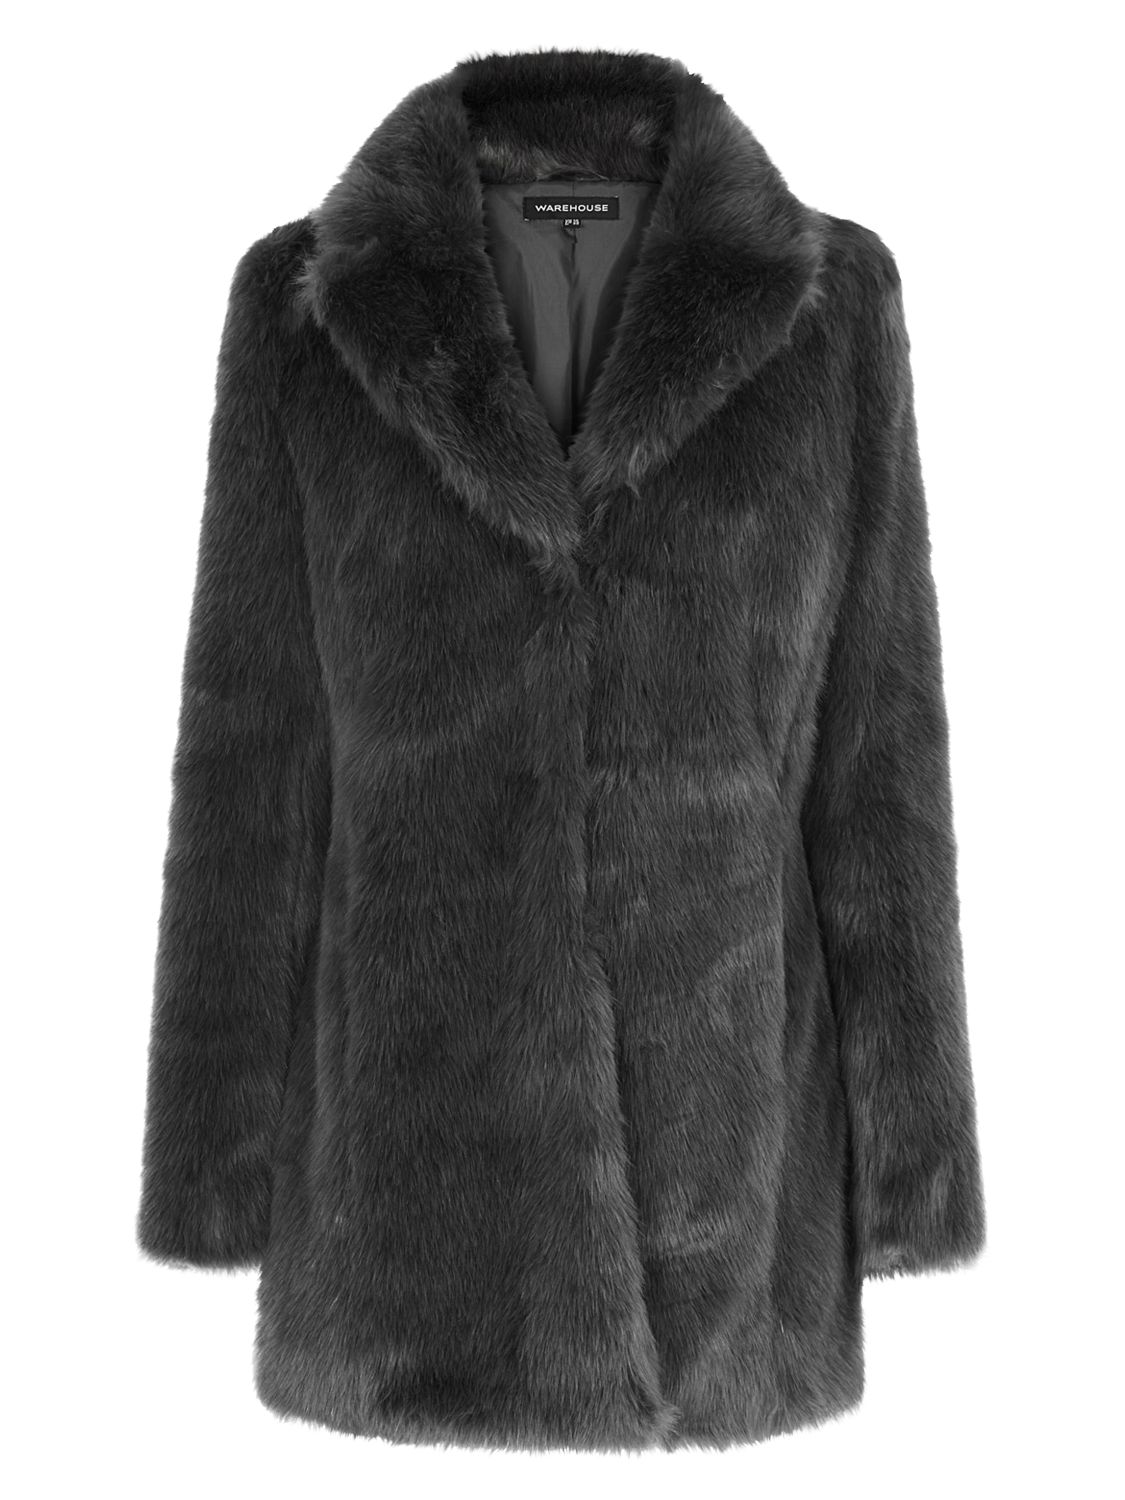 Warehouse Luxe Faux Fur Coat, Light Grey at John Lewis & Partners